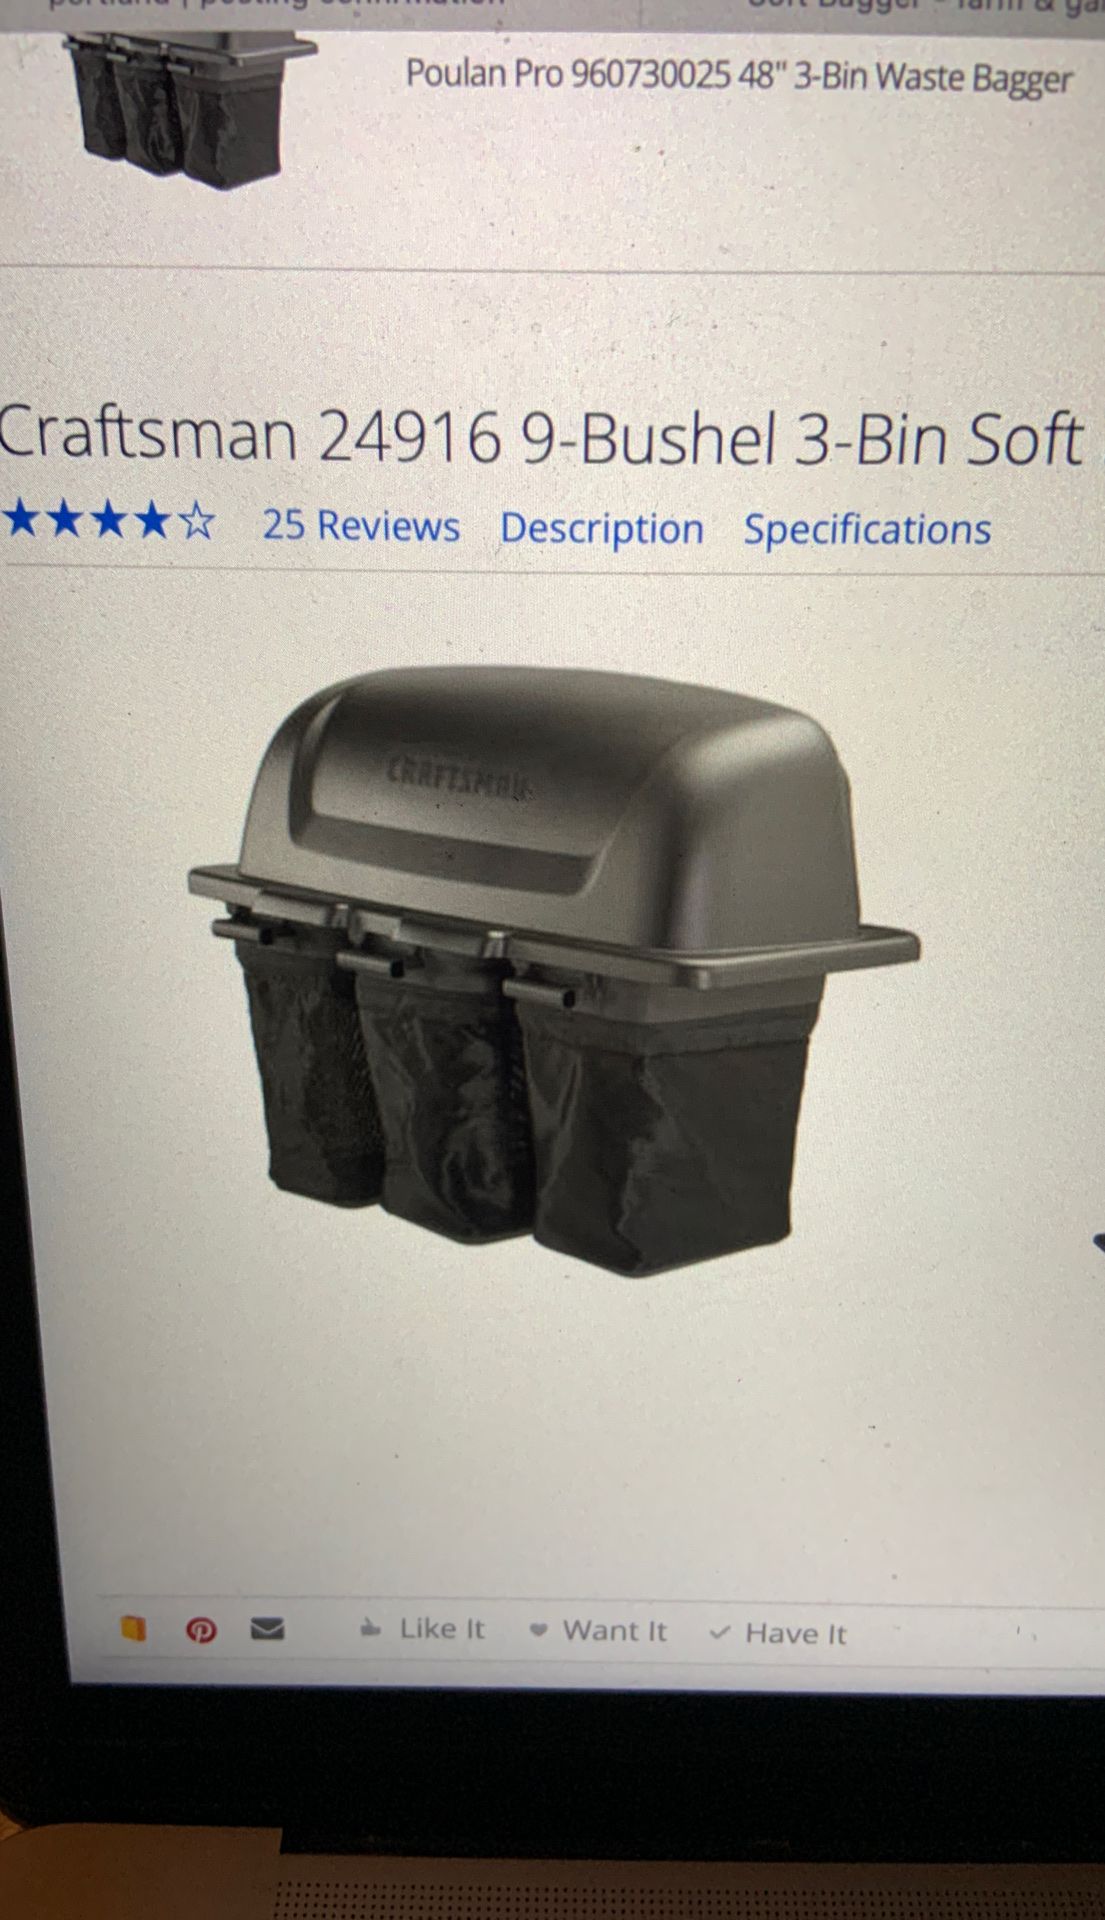 Craftsman 24916 9-bushel 3-bin soft bagger